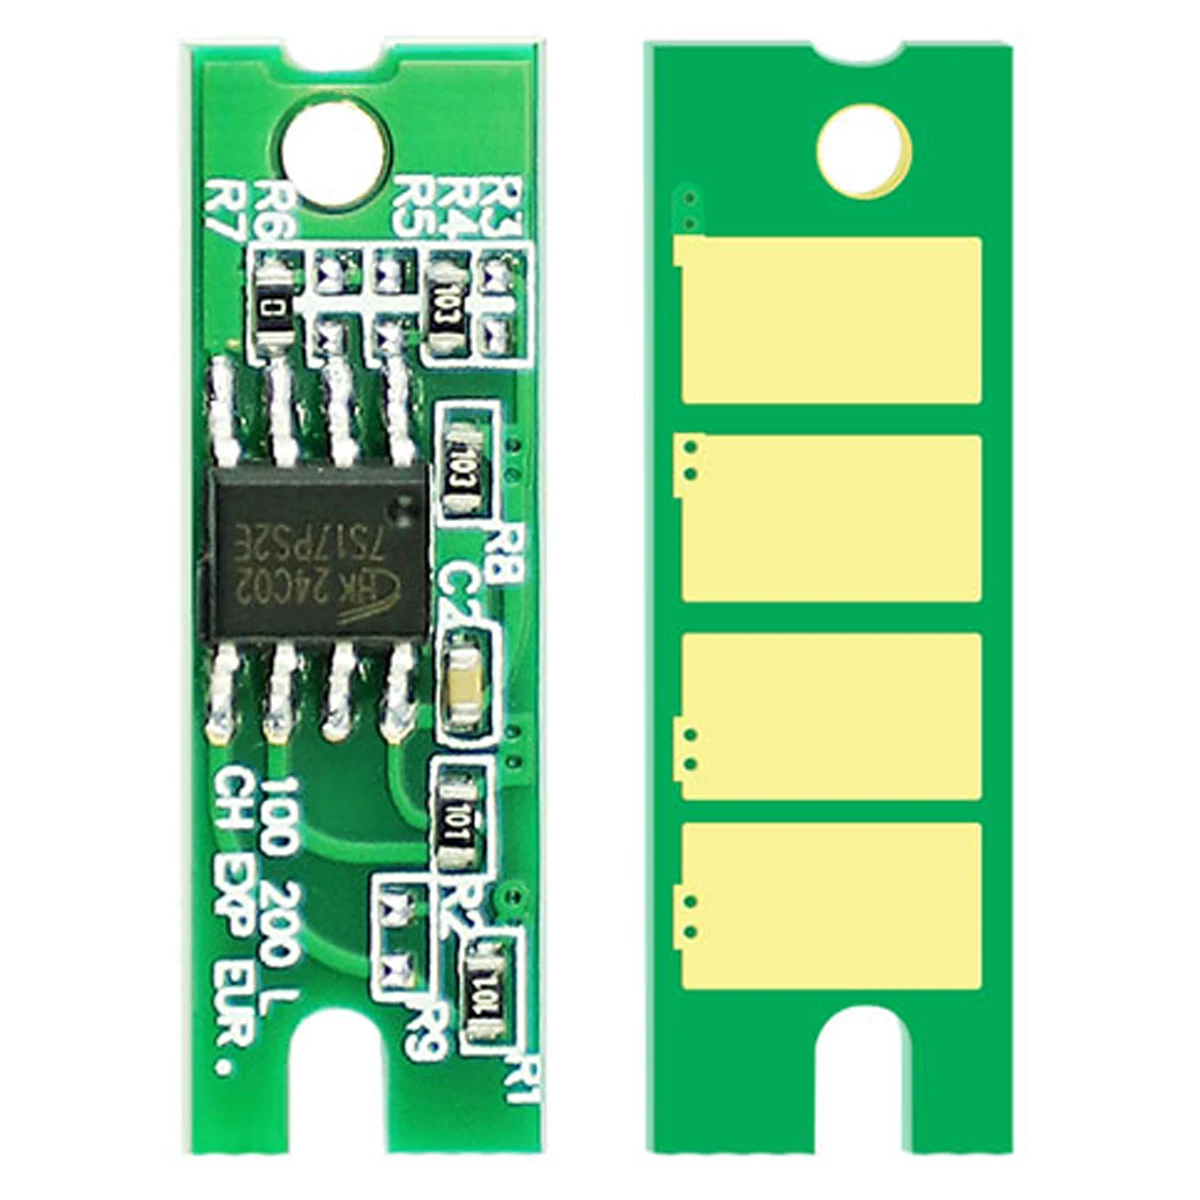 

5X Toner Cartridge Chip 407971 408010 Compatible For Ricoh SP150 SP150su SP150w SP150suw Sp 150 Laser Printer Reset Refill Chips